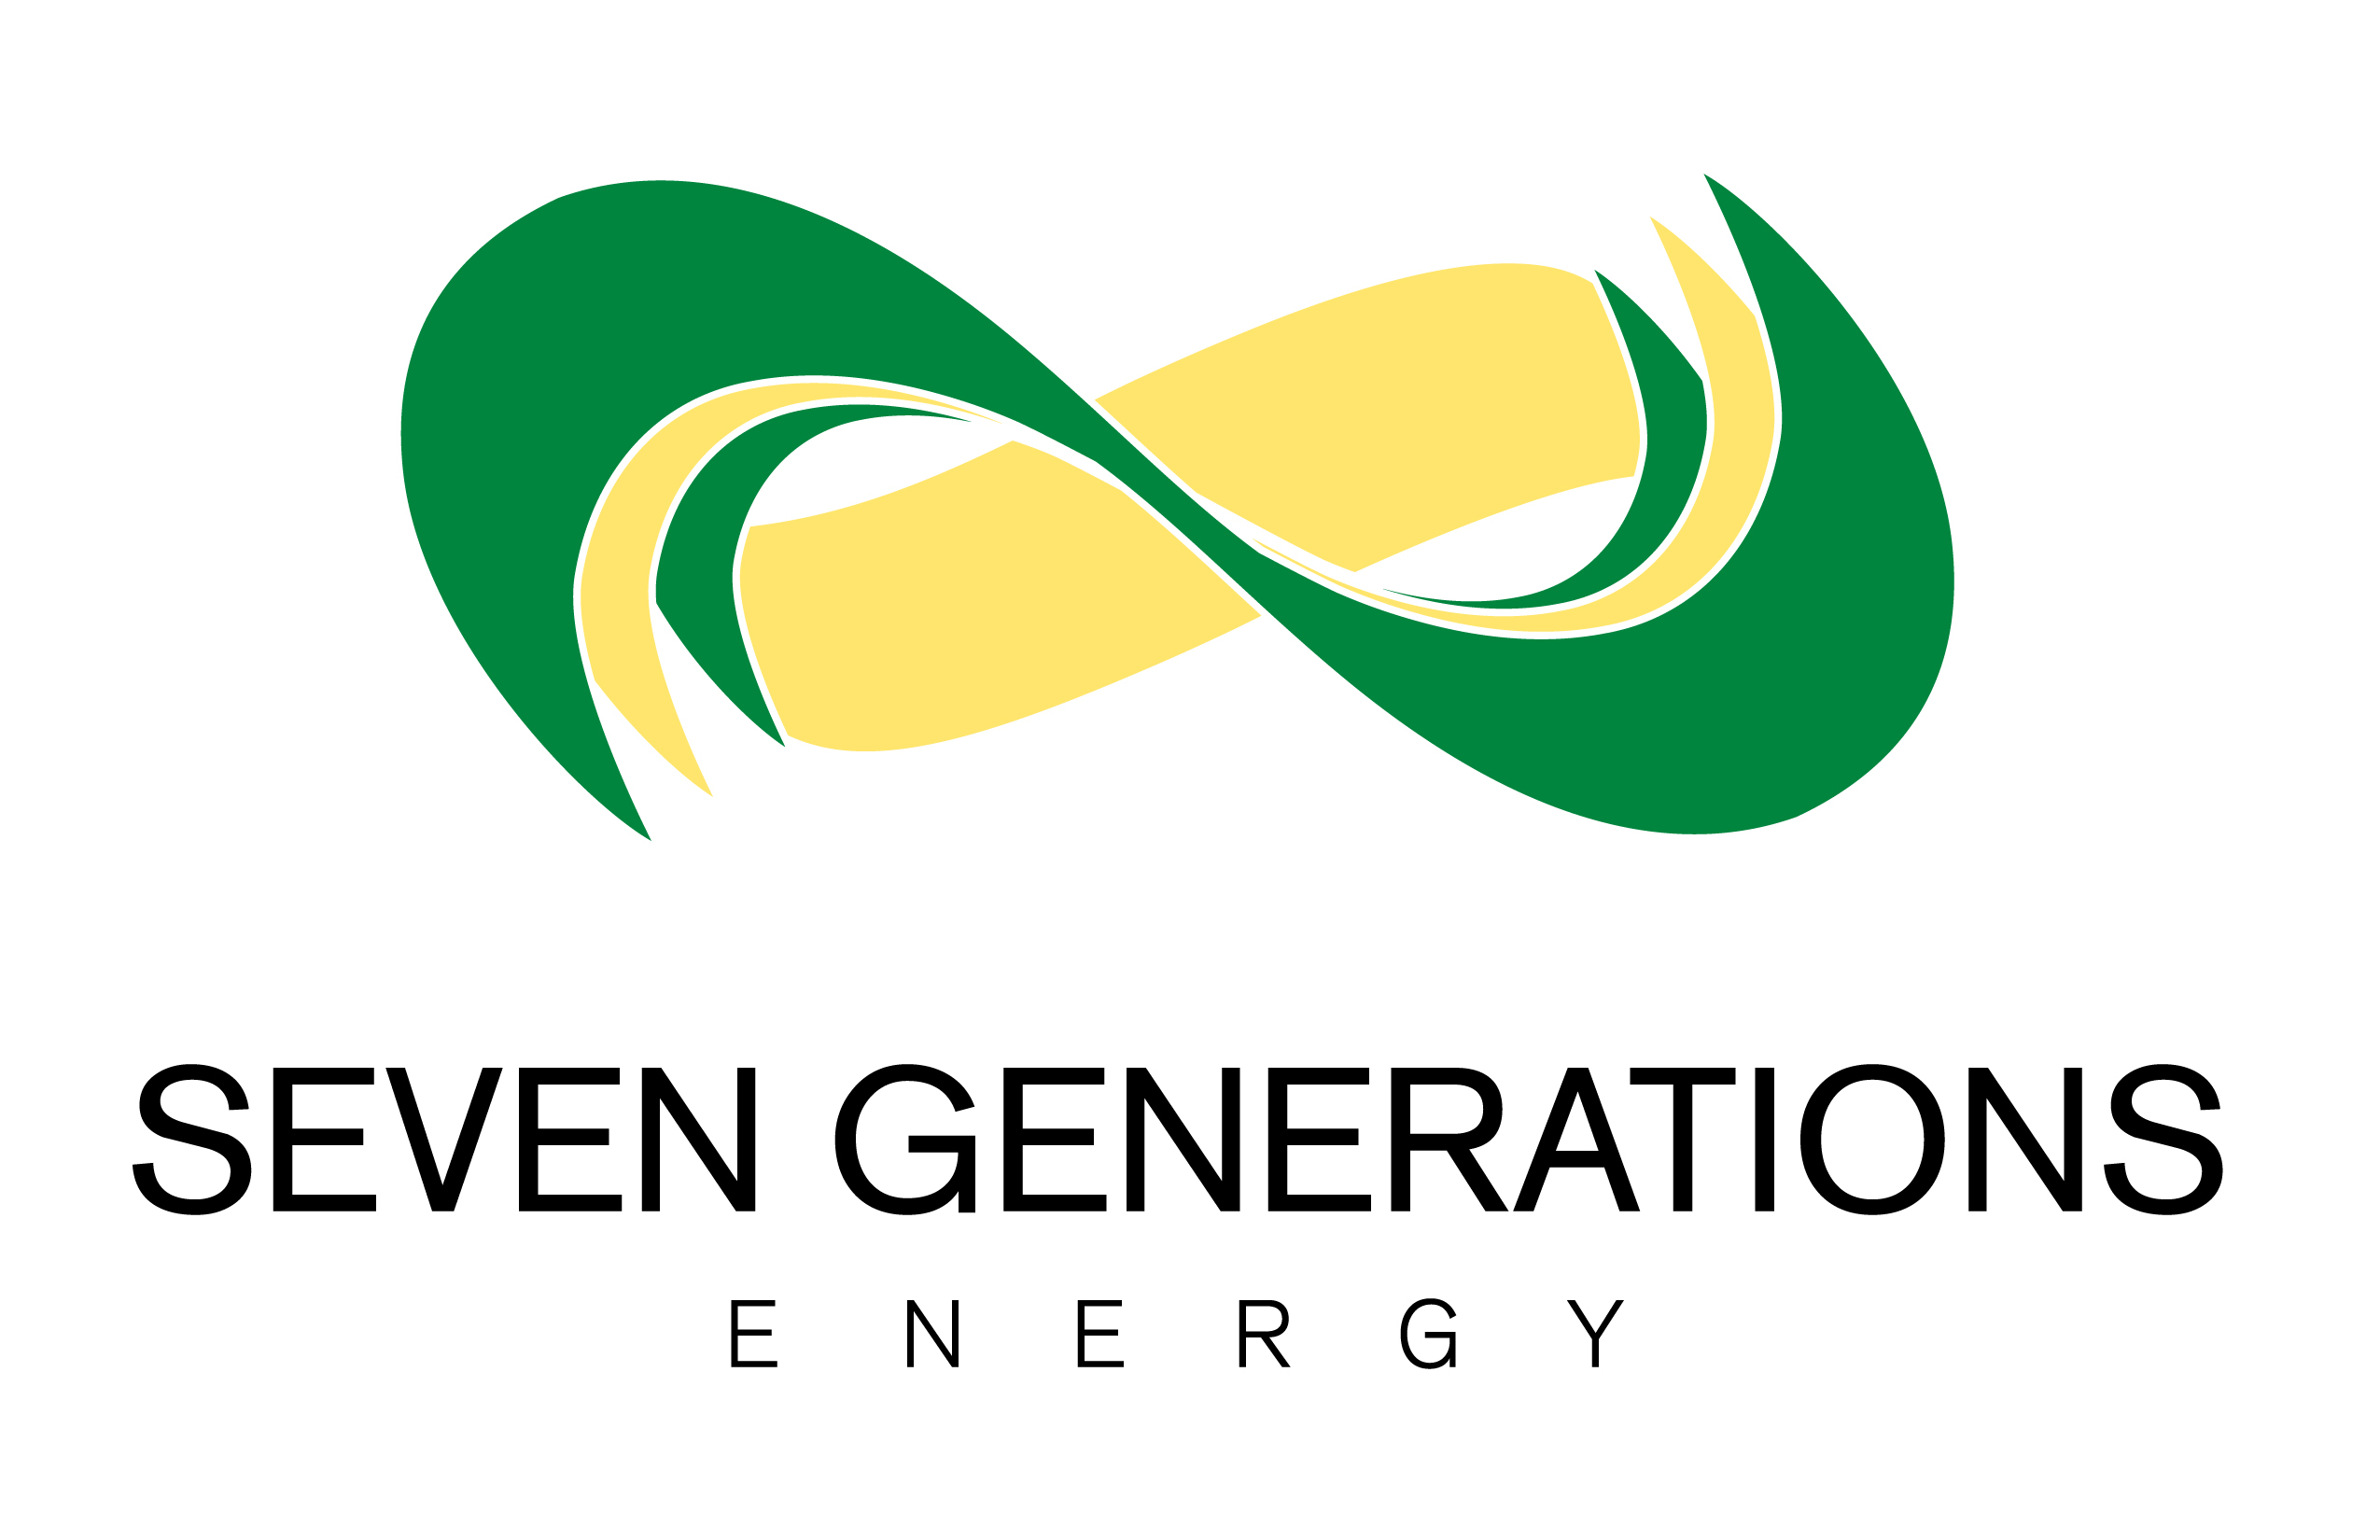 New energy ltd. Seven7 Энерджи. Логотип Seventh Generation. 7 Generation. Encana компания.